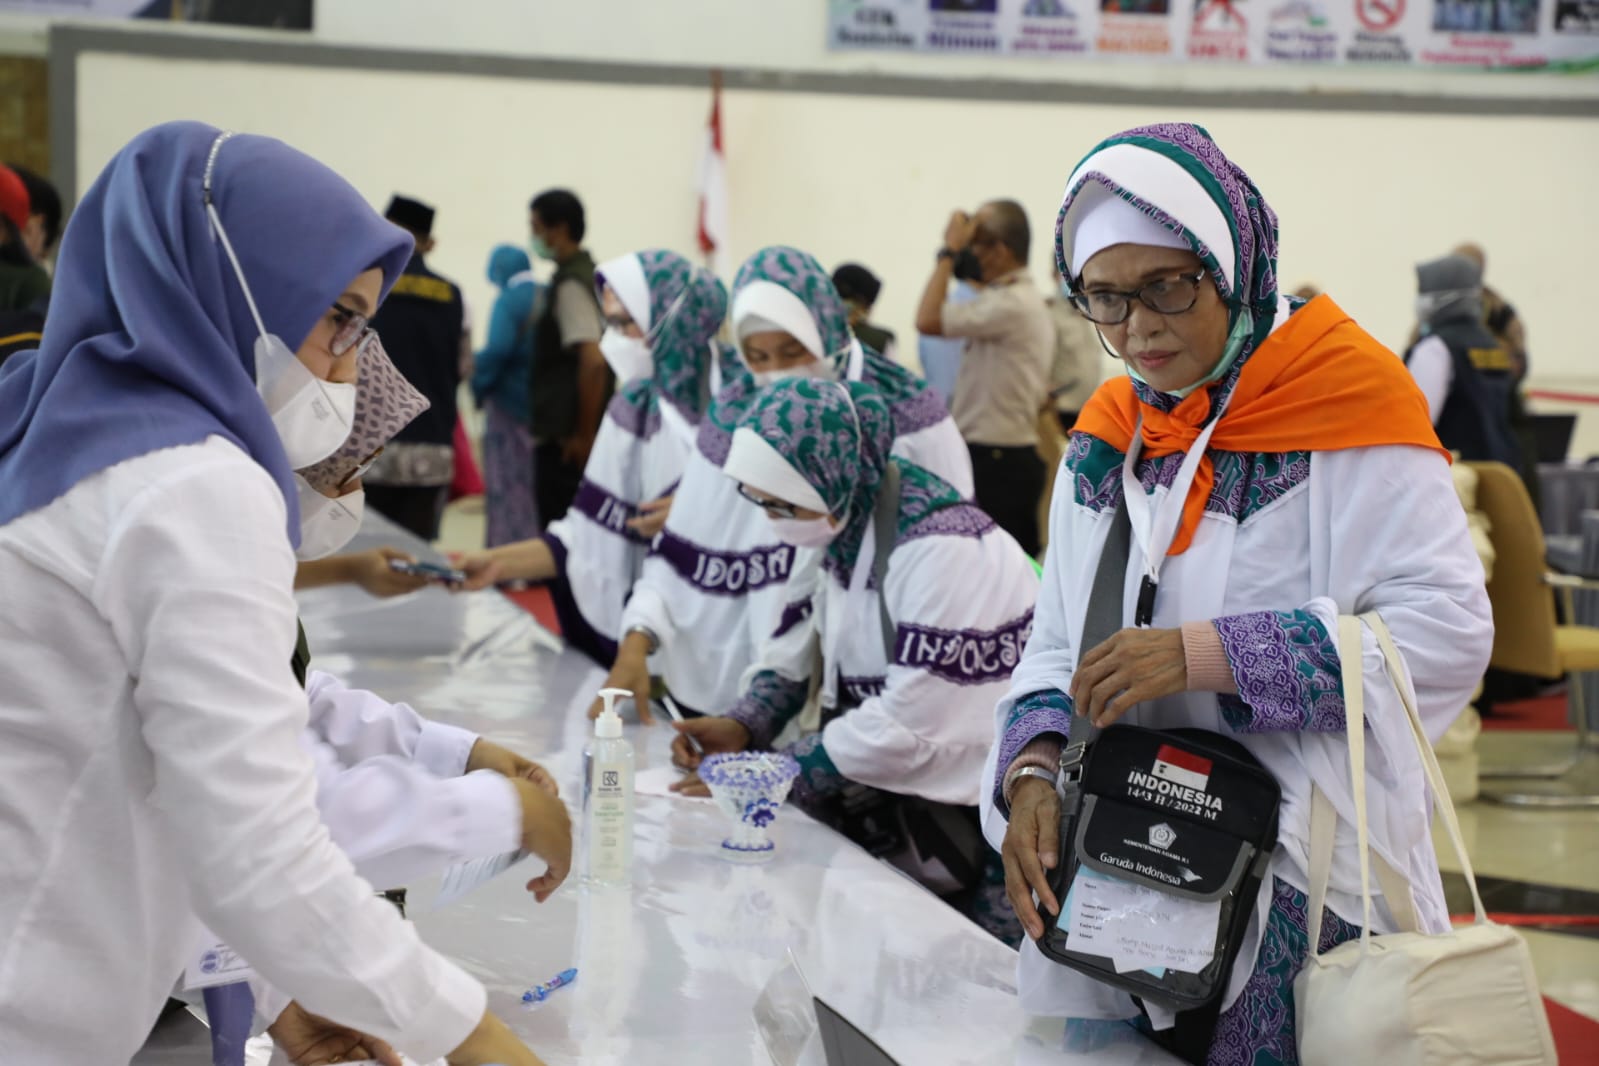 Hajj1443 – 29,126 Indonesian pilgrims enjoy 'fast track' to speed up immigration process